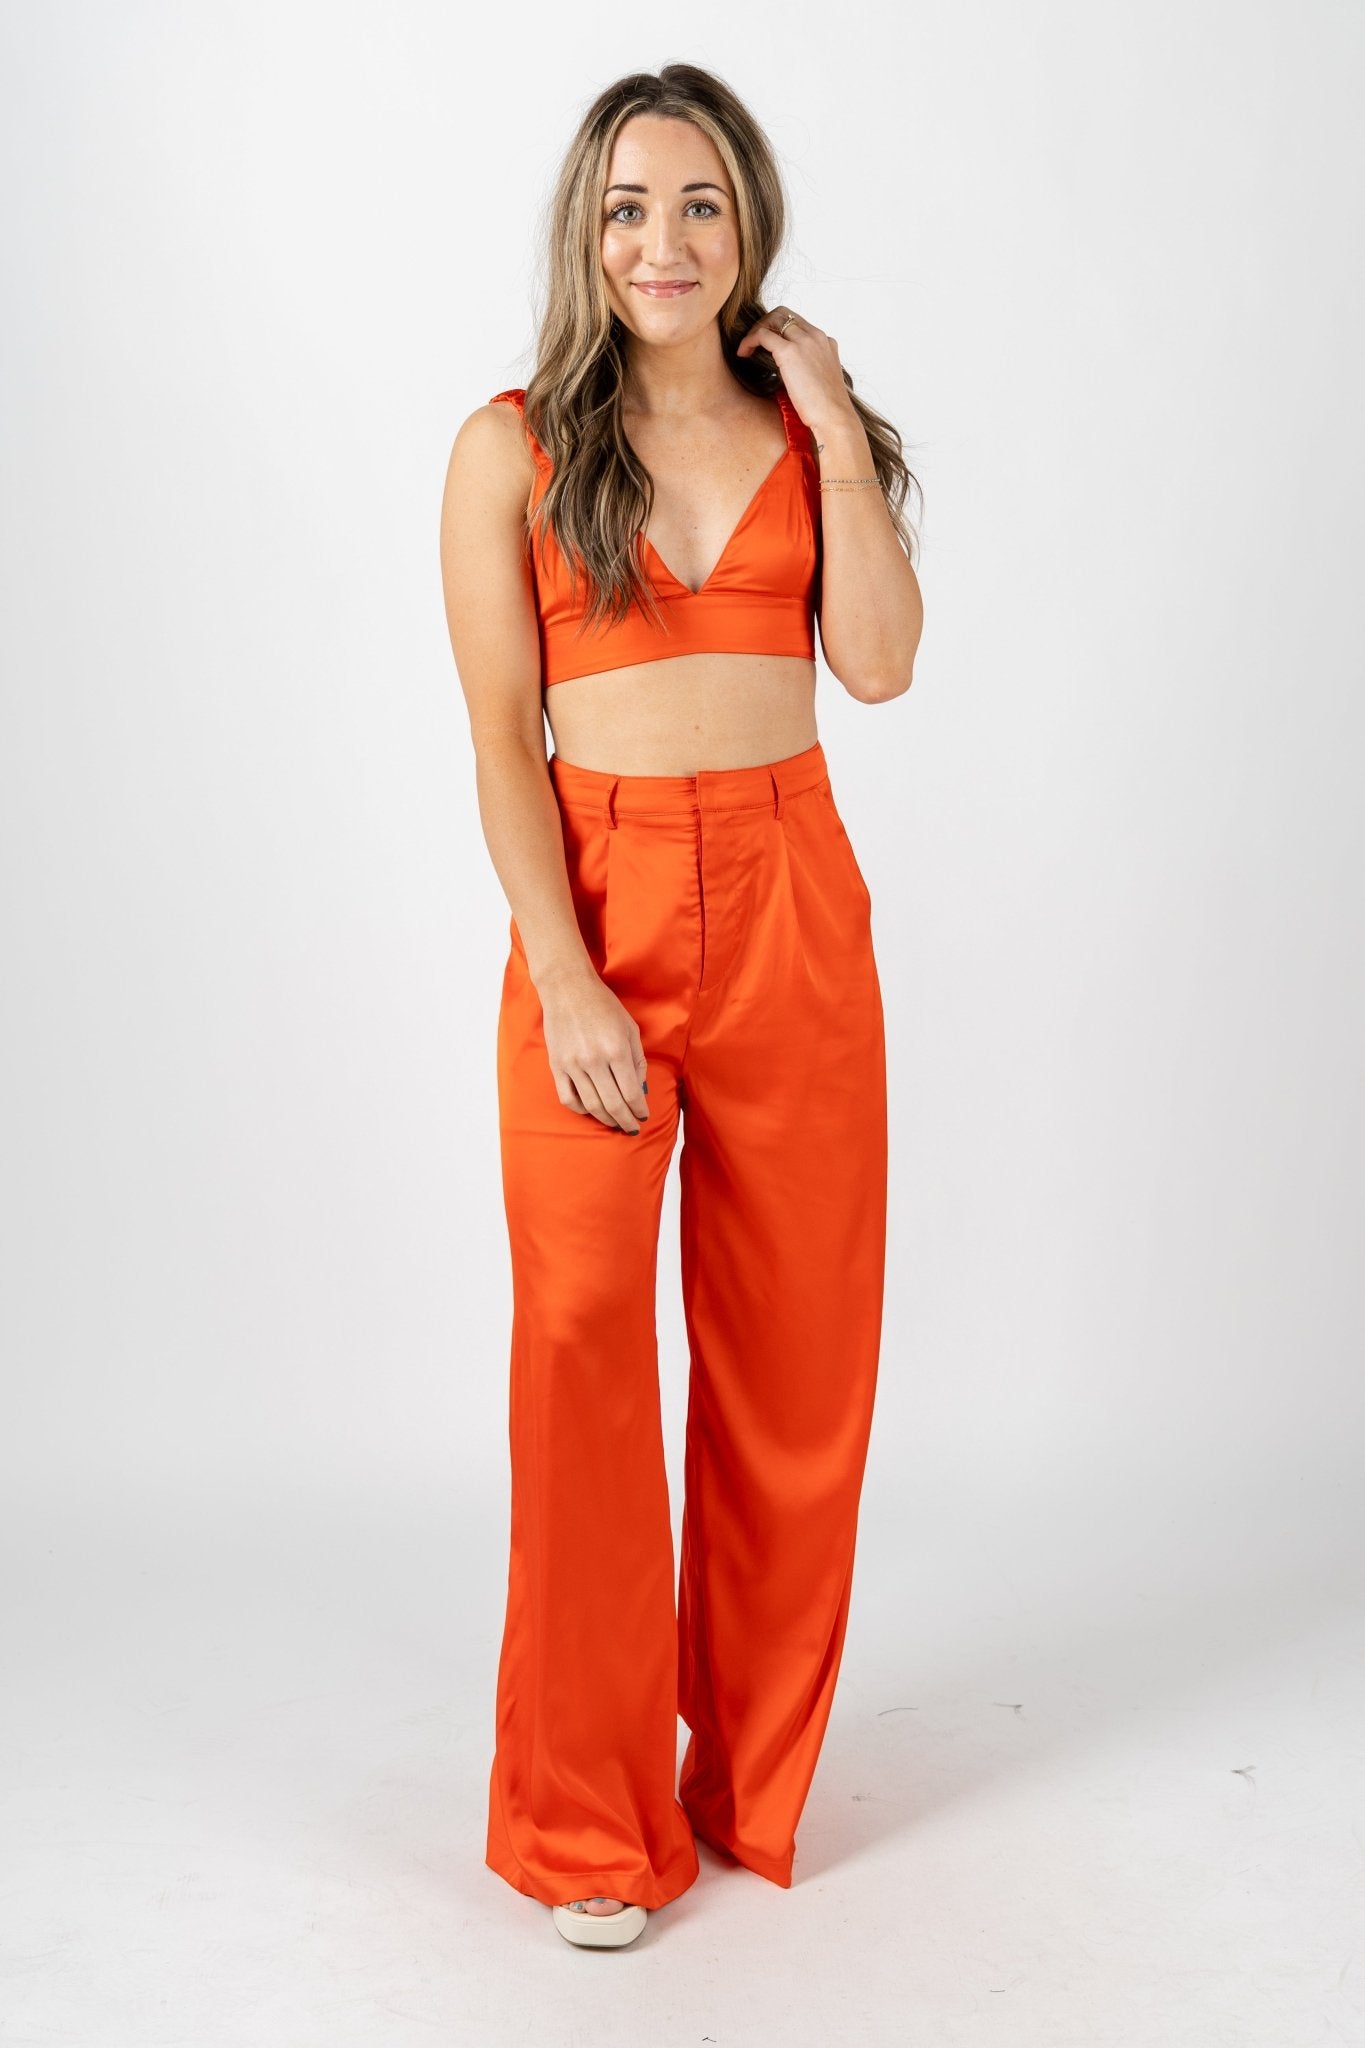 Satin cami tank top orange red Stylish Top - Womens Fashion Tank Tops at Lush Fashion Lounge Boutique in Oklahoma City